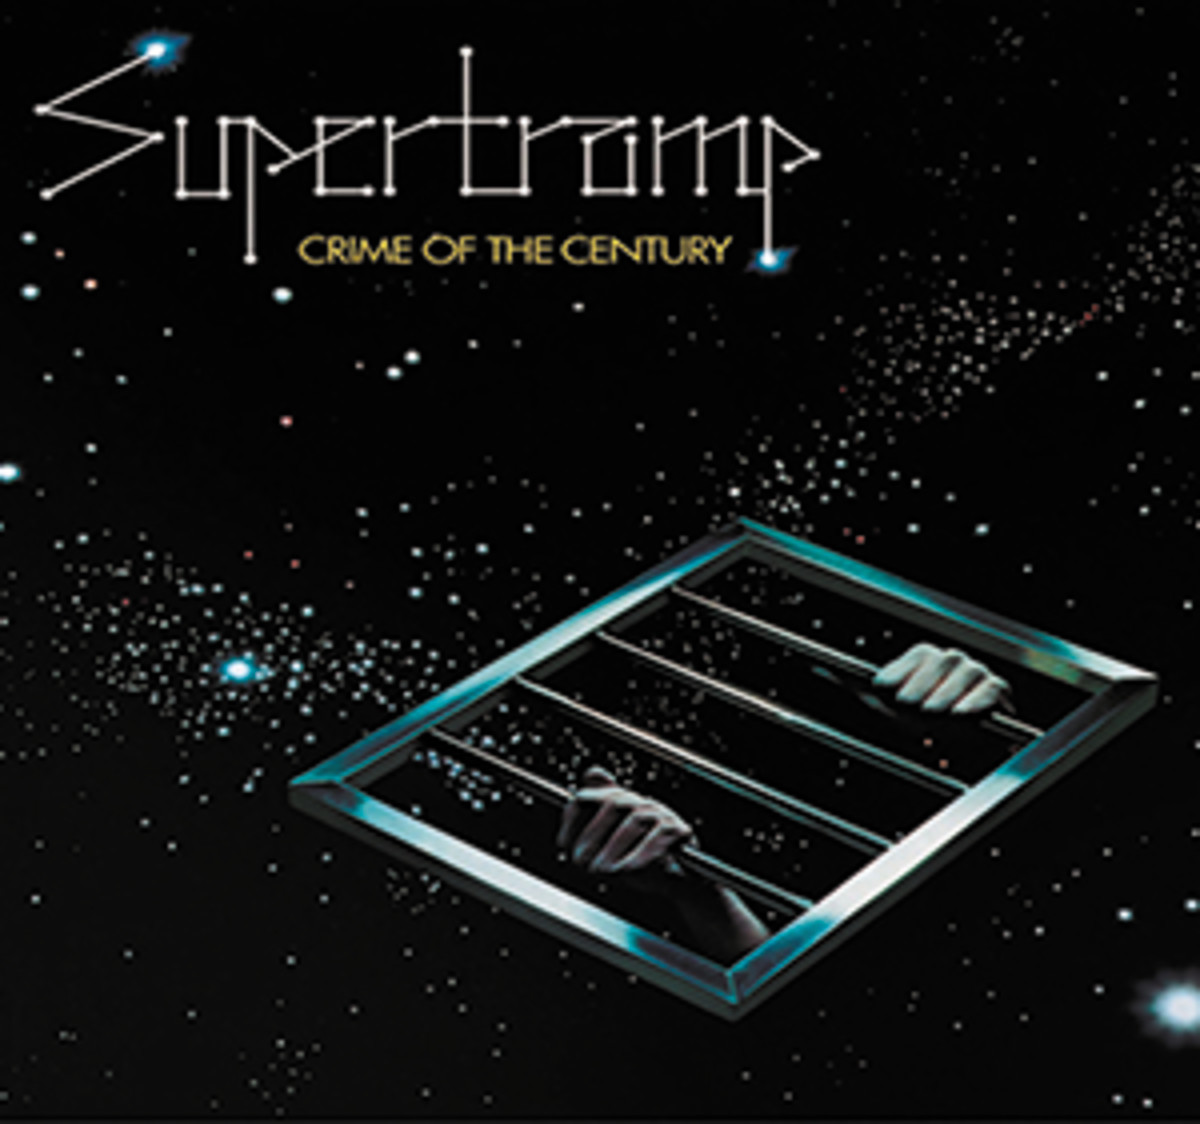 Supertramp_Crime of the Century